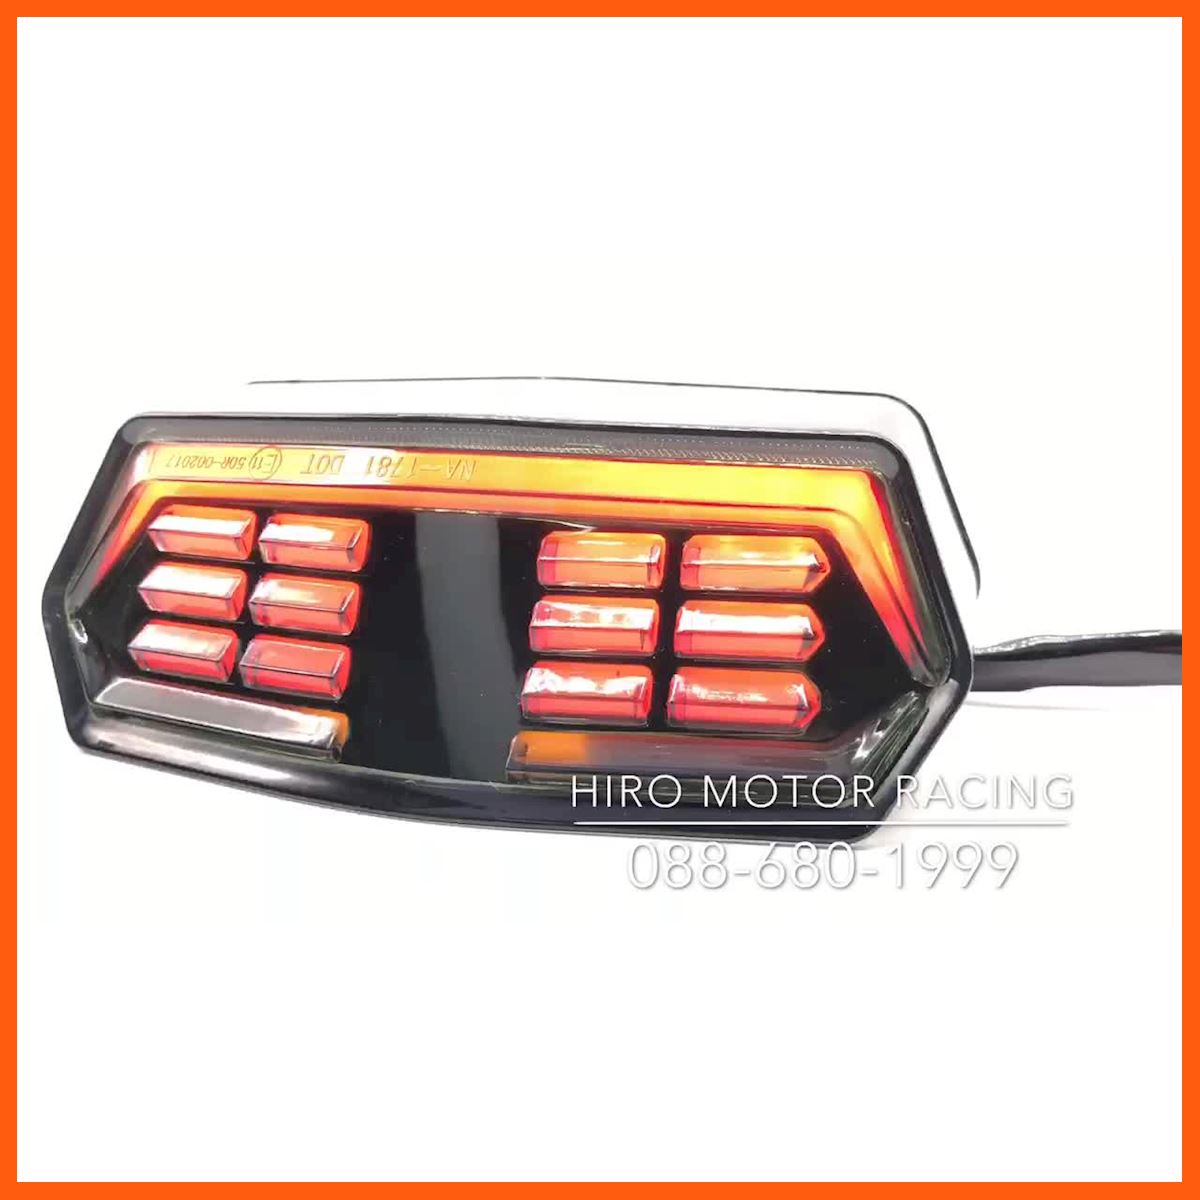 Best Quality ไฟท้ายแต่ง MSX-125 Racing King 💢💢มีโค๊ดลดราคา !! ถึง หมดเขต 16-25 พฤษภาคม 2019💢💢 อะไหล่รถยนต์ Auto parts กระบอกโช๊ค Shock cylinder ชุดน็อตรถยนต์ Car nut set ไส้ กรอง Filter อุปกรณ์รถยนต์ Car accessories